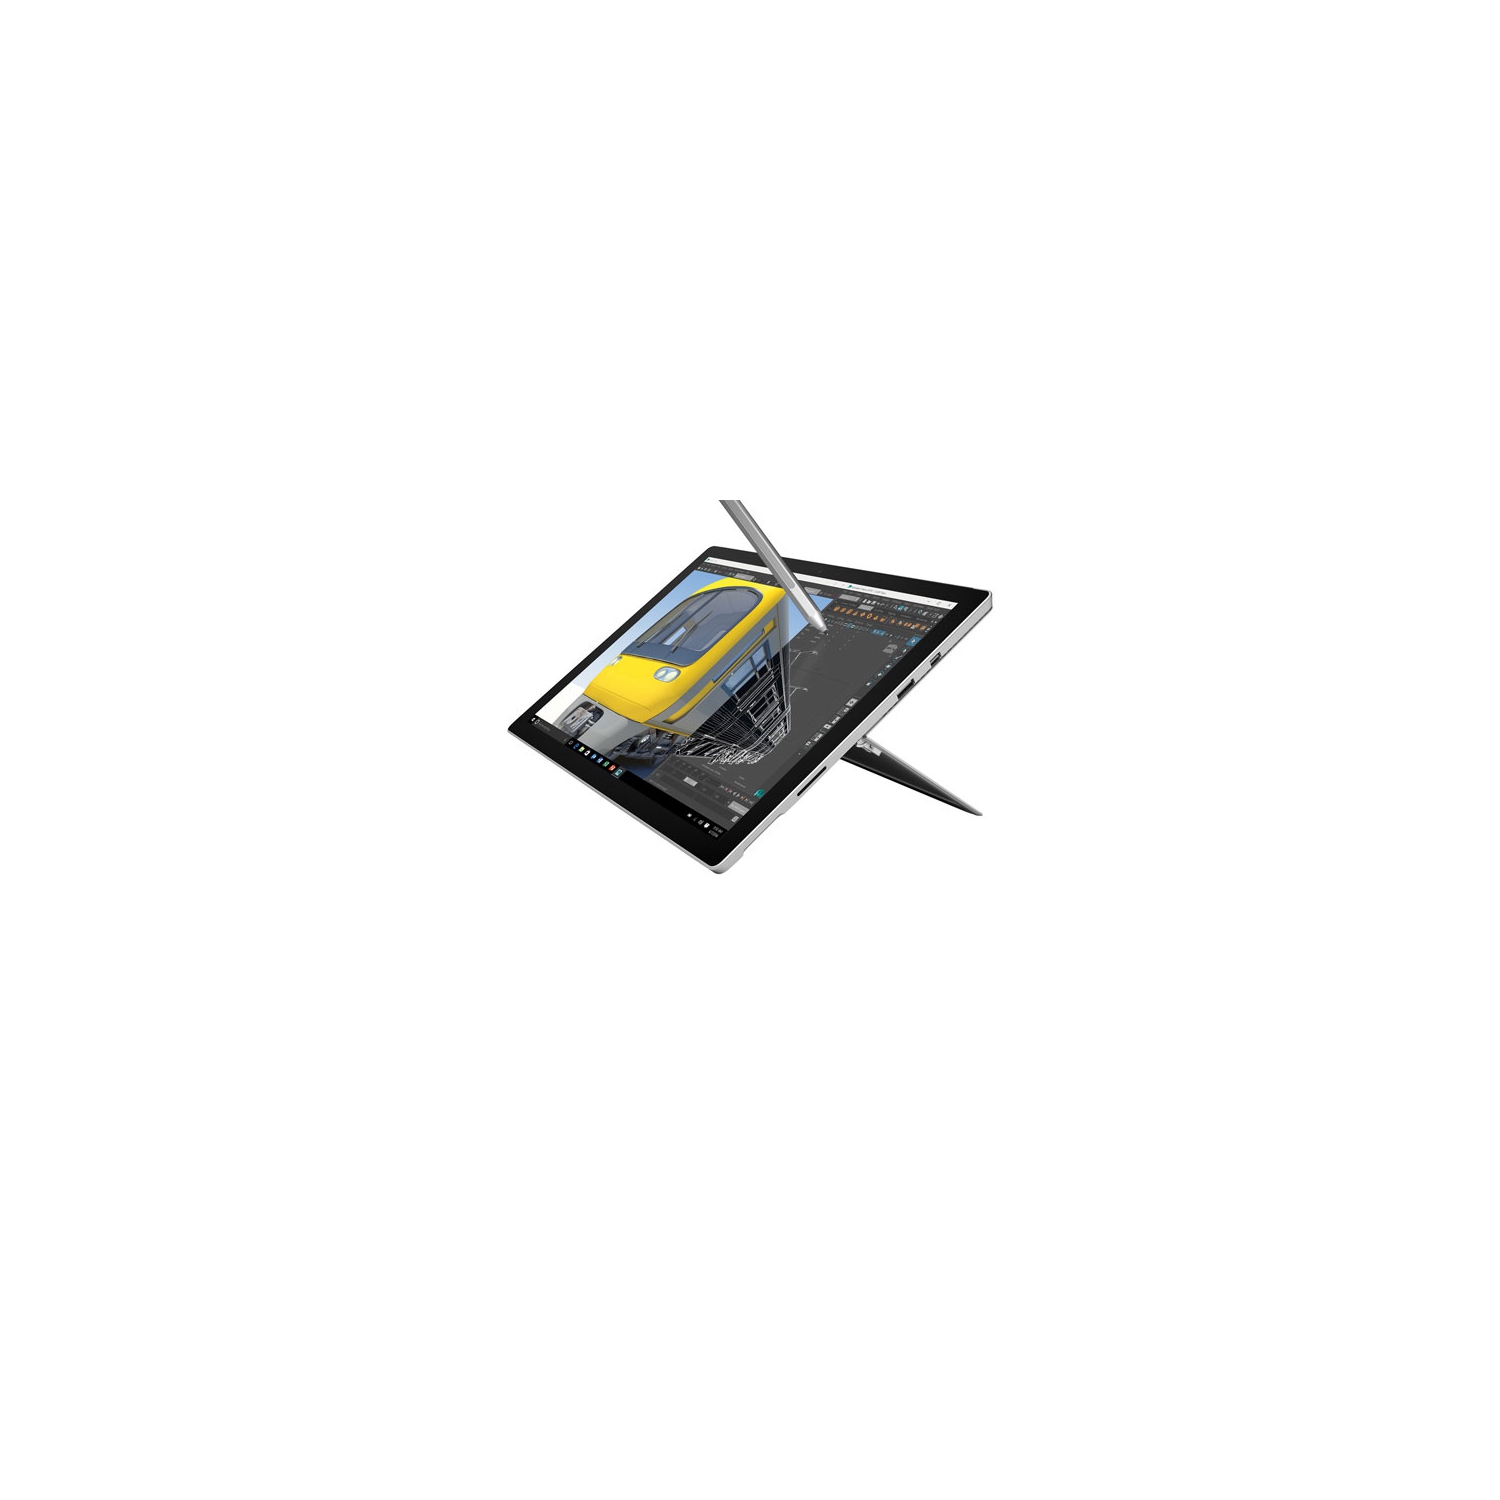 Refurbished (Fair) - Microsoft Surface Pro 4 12.3" 128 Windows 10 Tablet With 6th Gen Intel Core i5-6300U - Silver